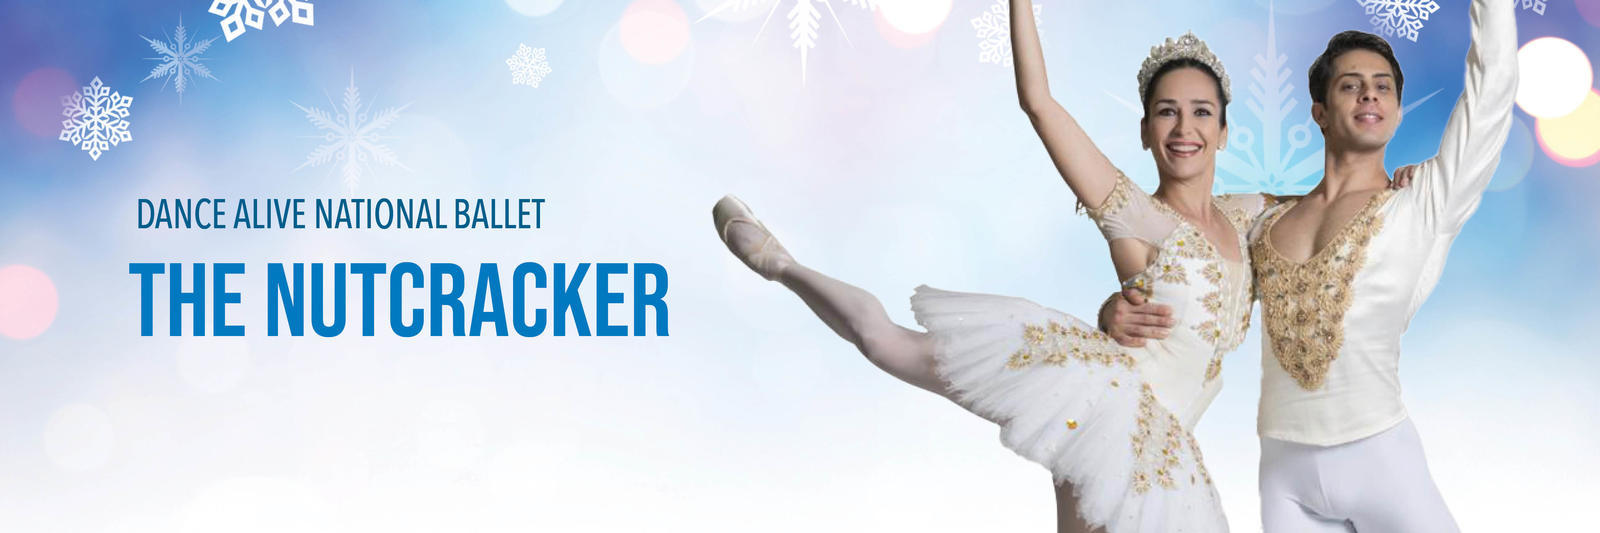 Dance Alive National Ballet The Nutcracker